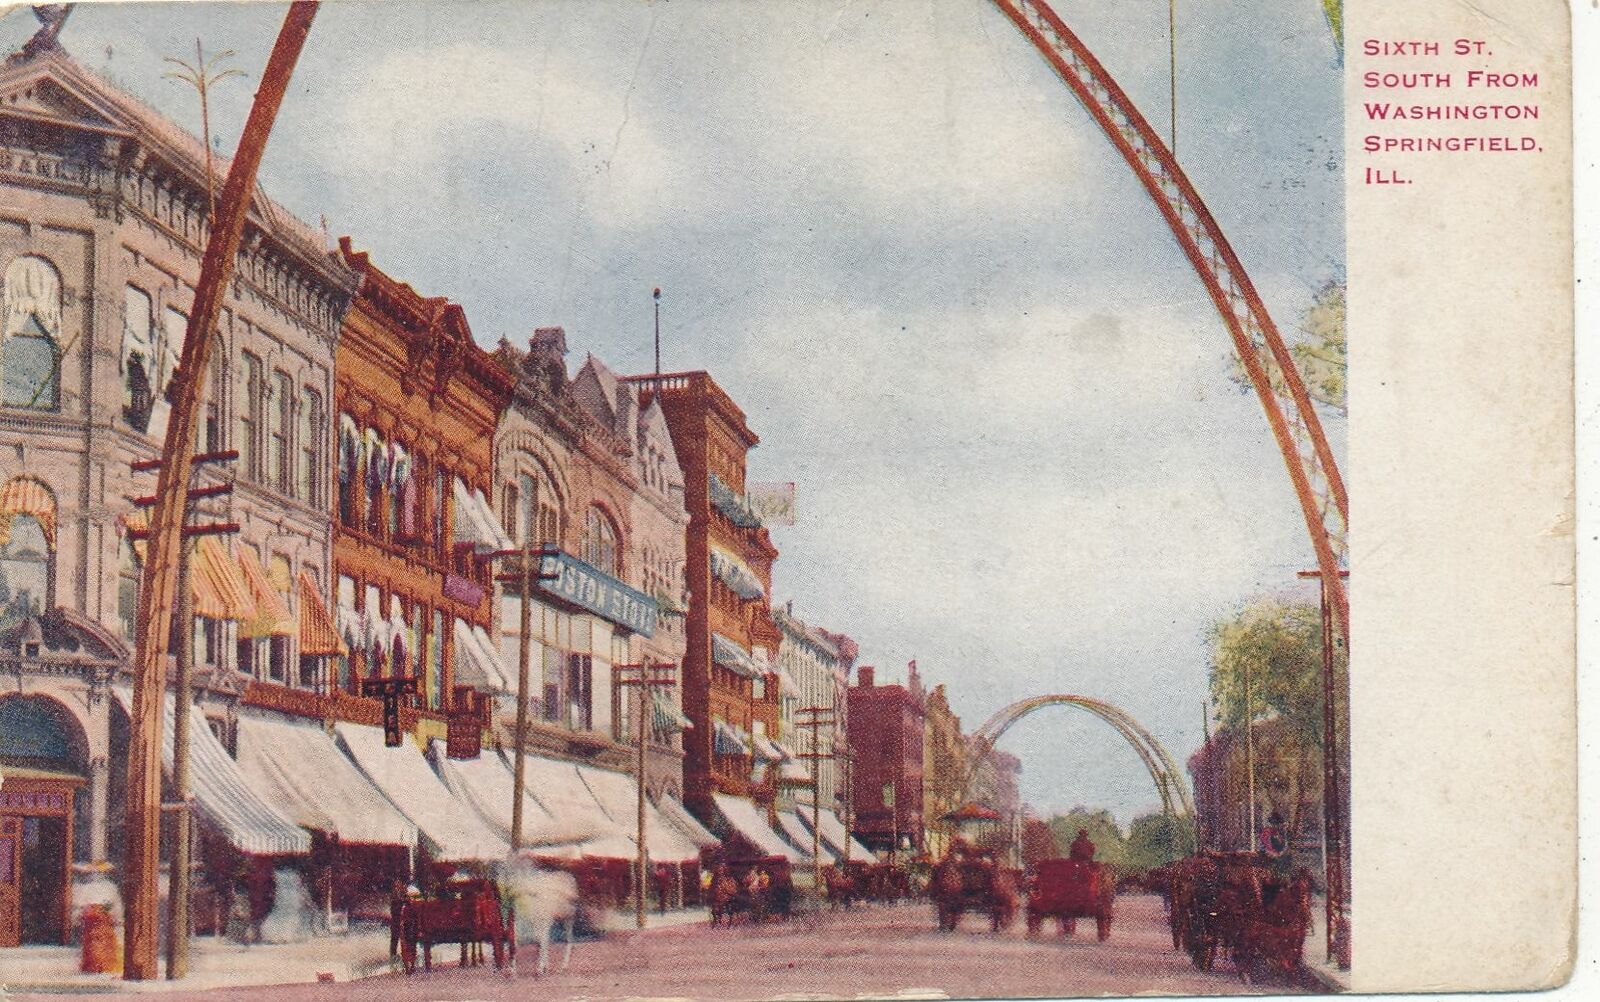 SPRINGFIELD IL - Sixth Street South From Washington - 1912